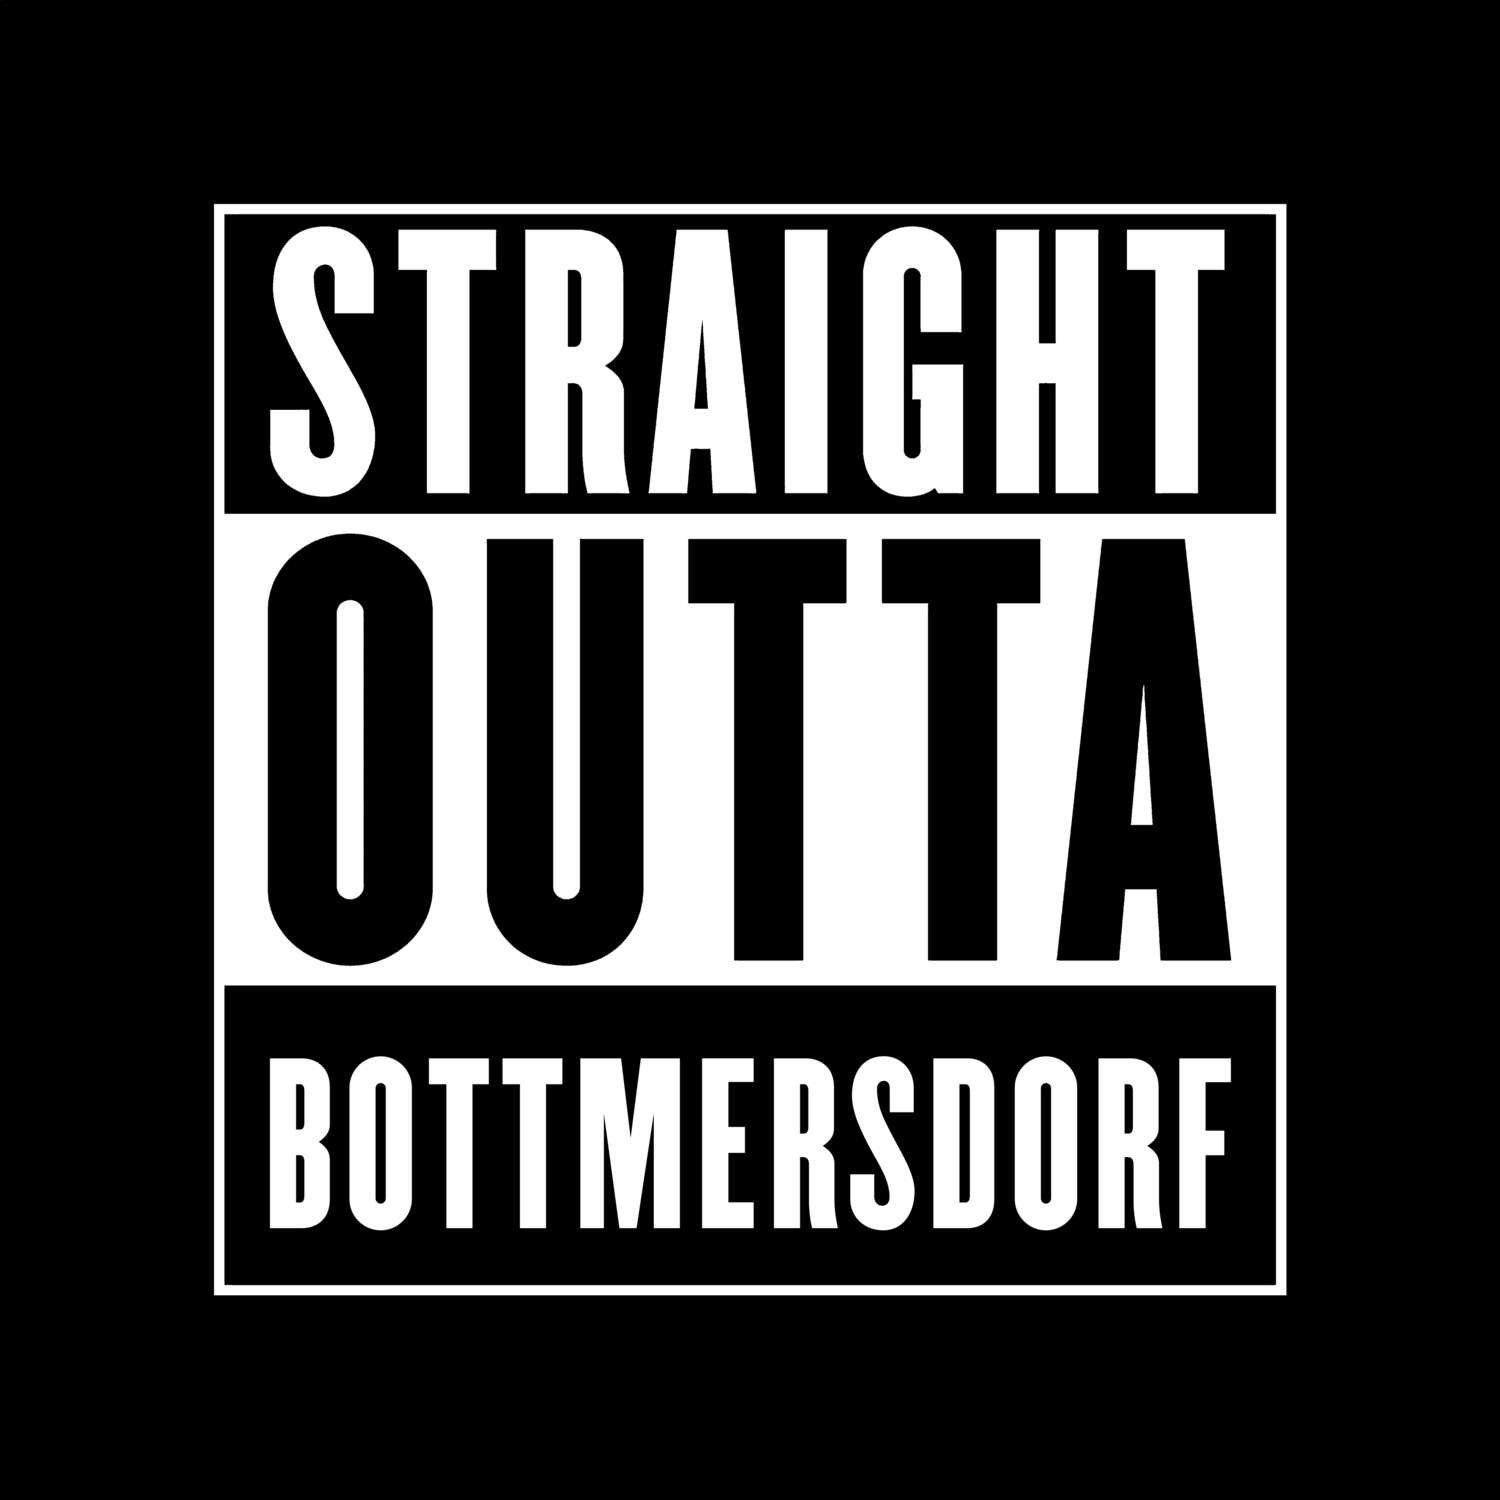 Bottmersdorf T-Shirt »Straight Outta«